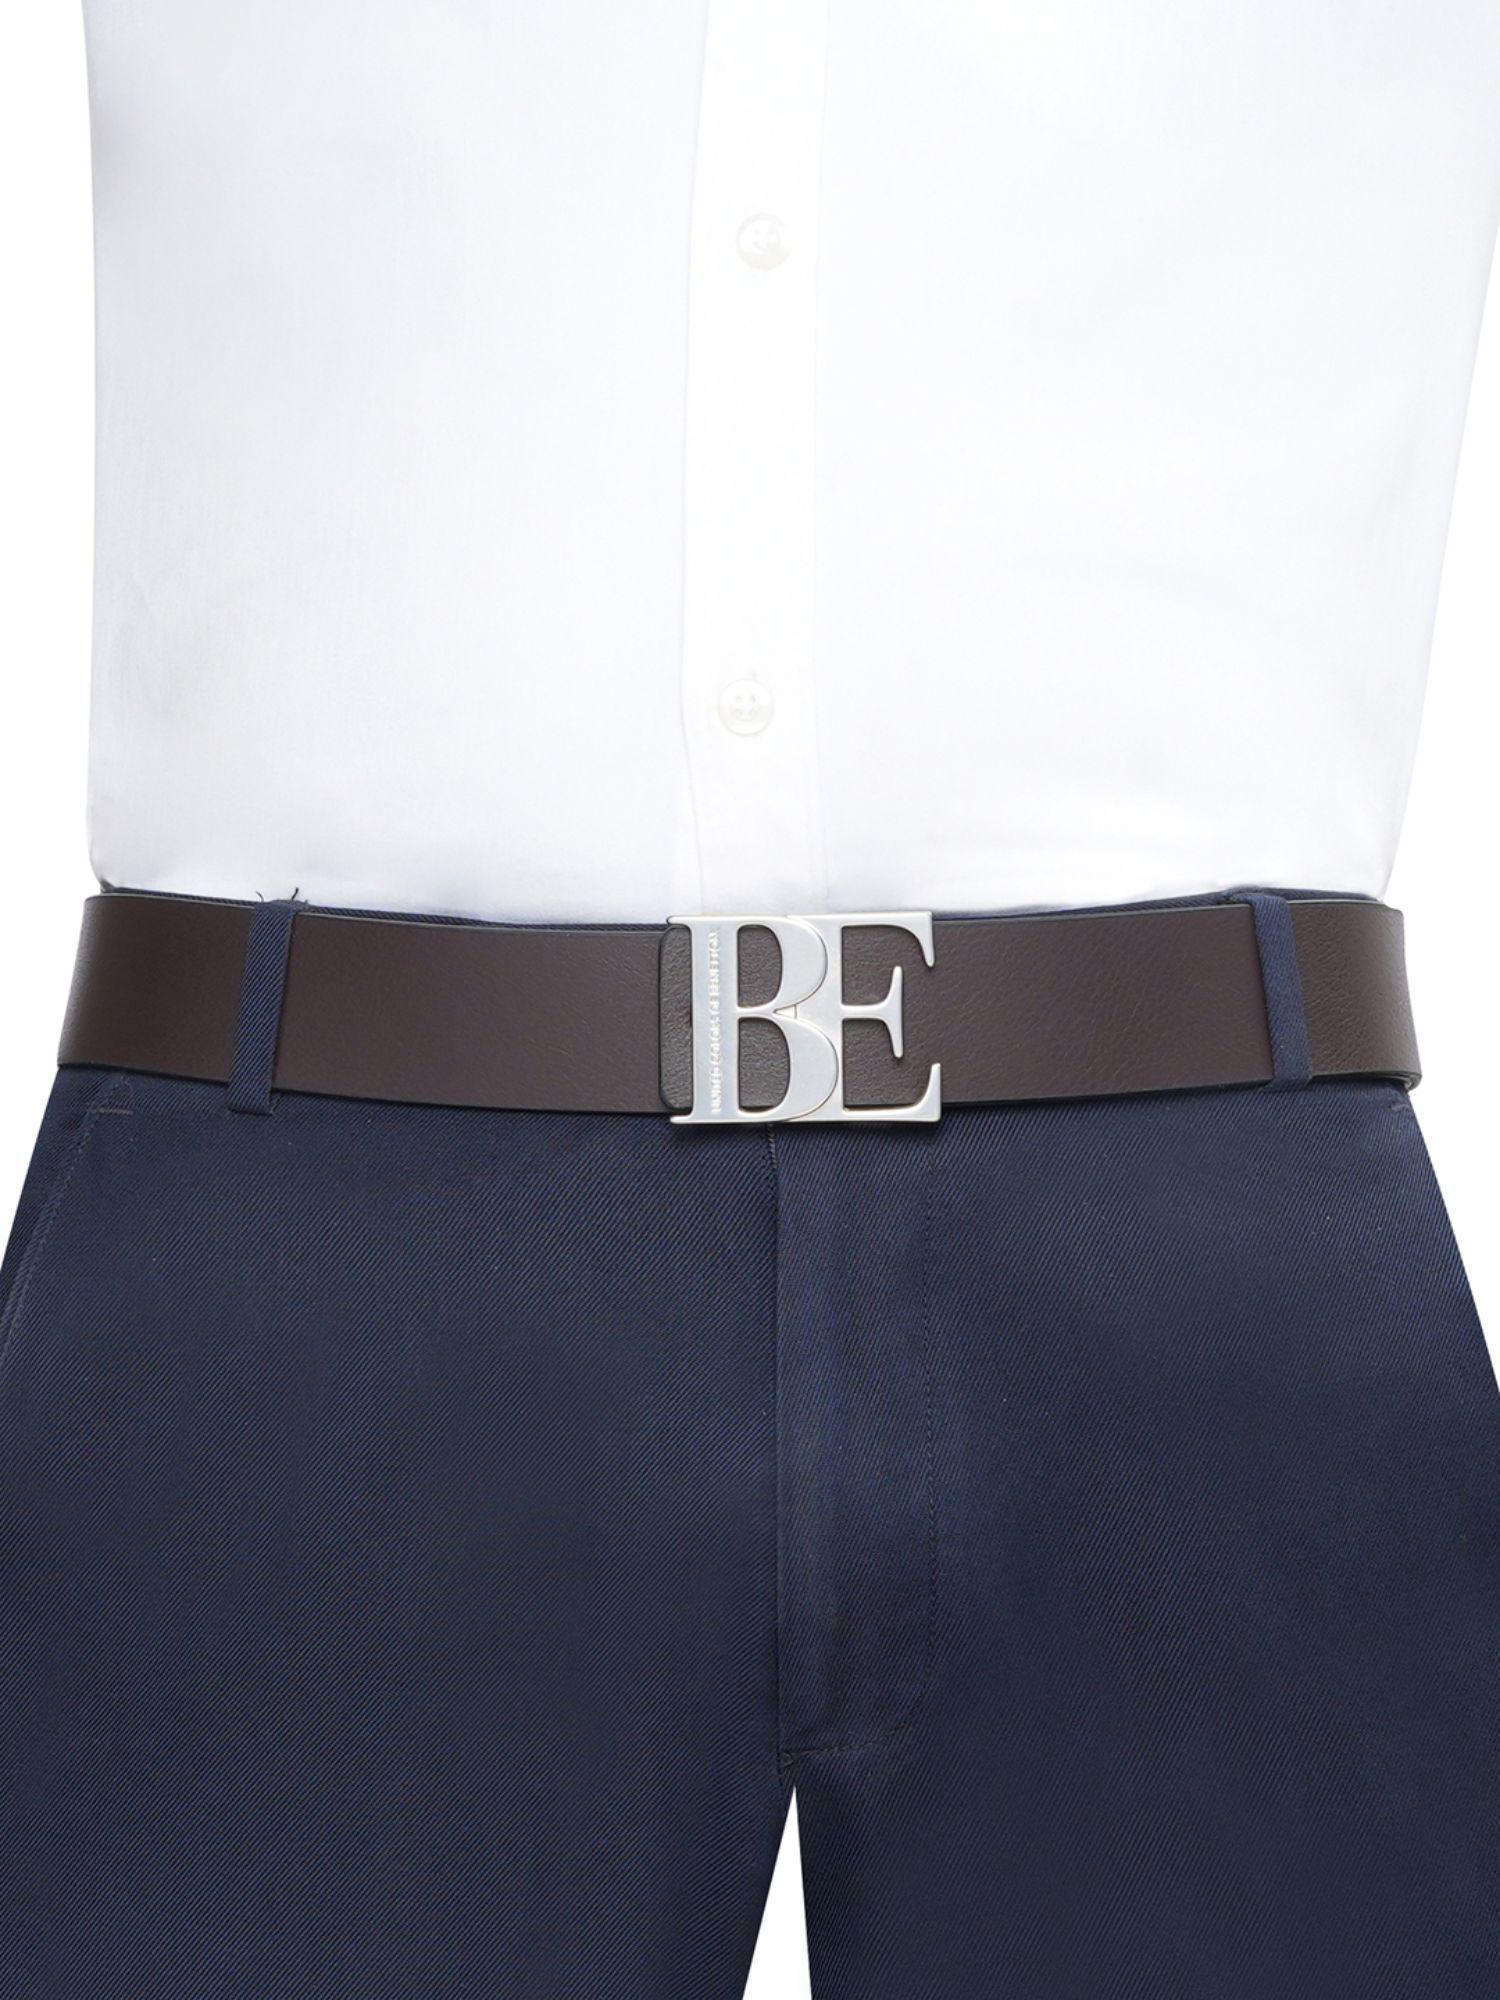 becca men leather reversible belt - brown, s 80 cm